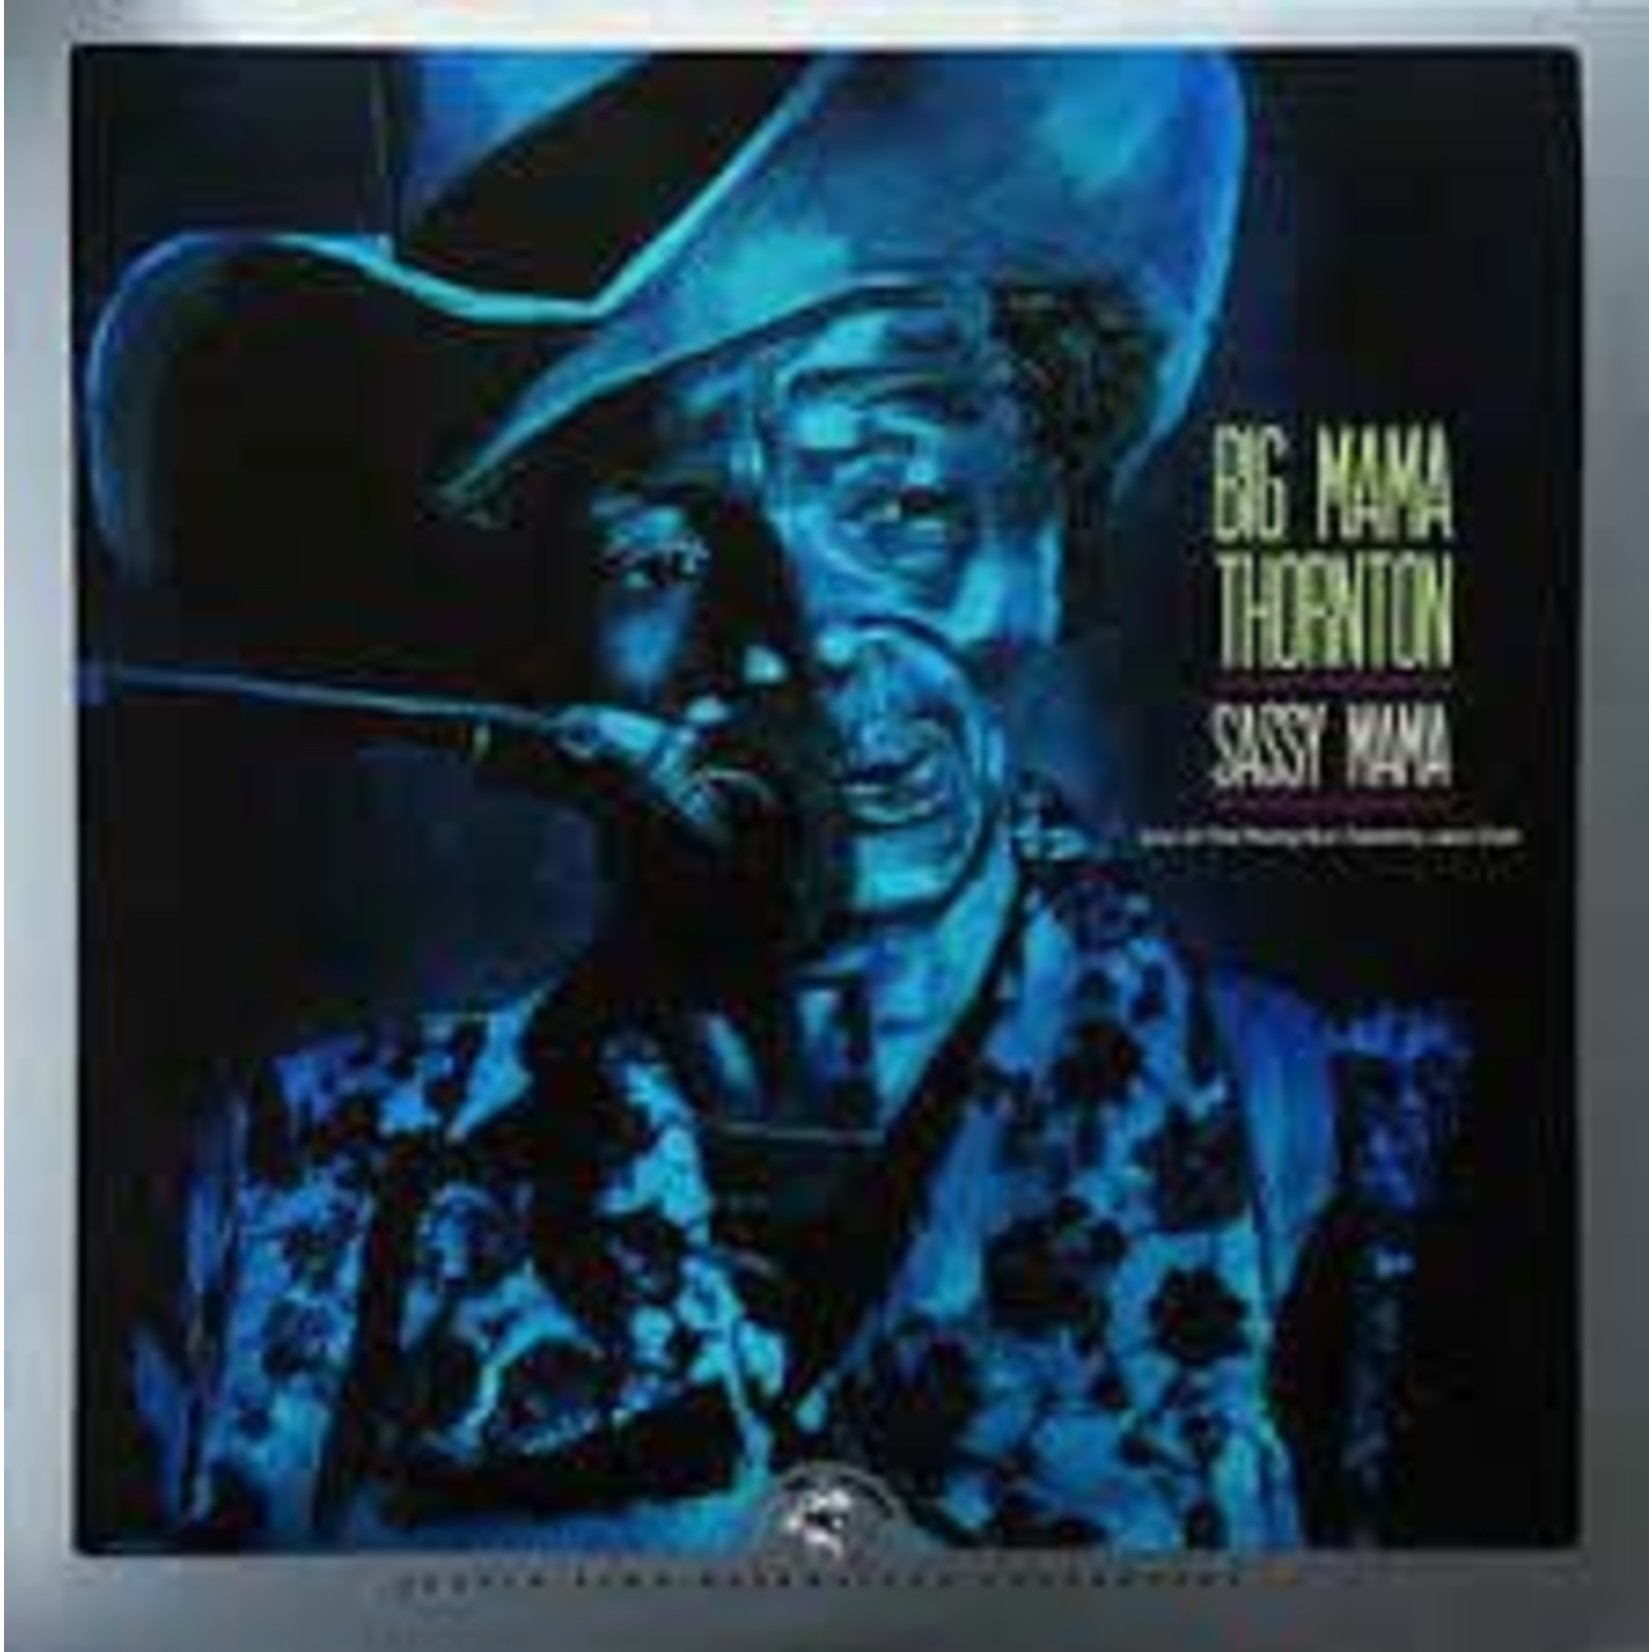 BIG MAMA THORNTON - SASSY MAMA (vinyl)